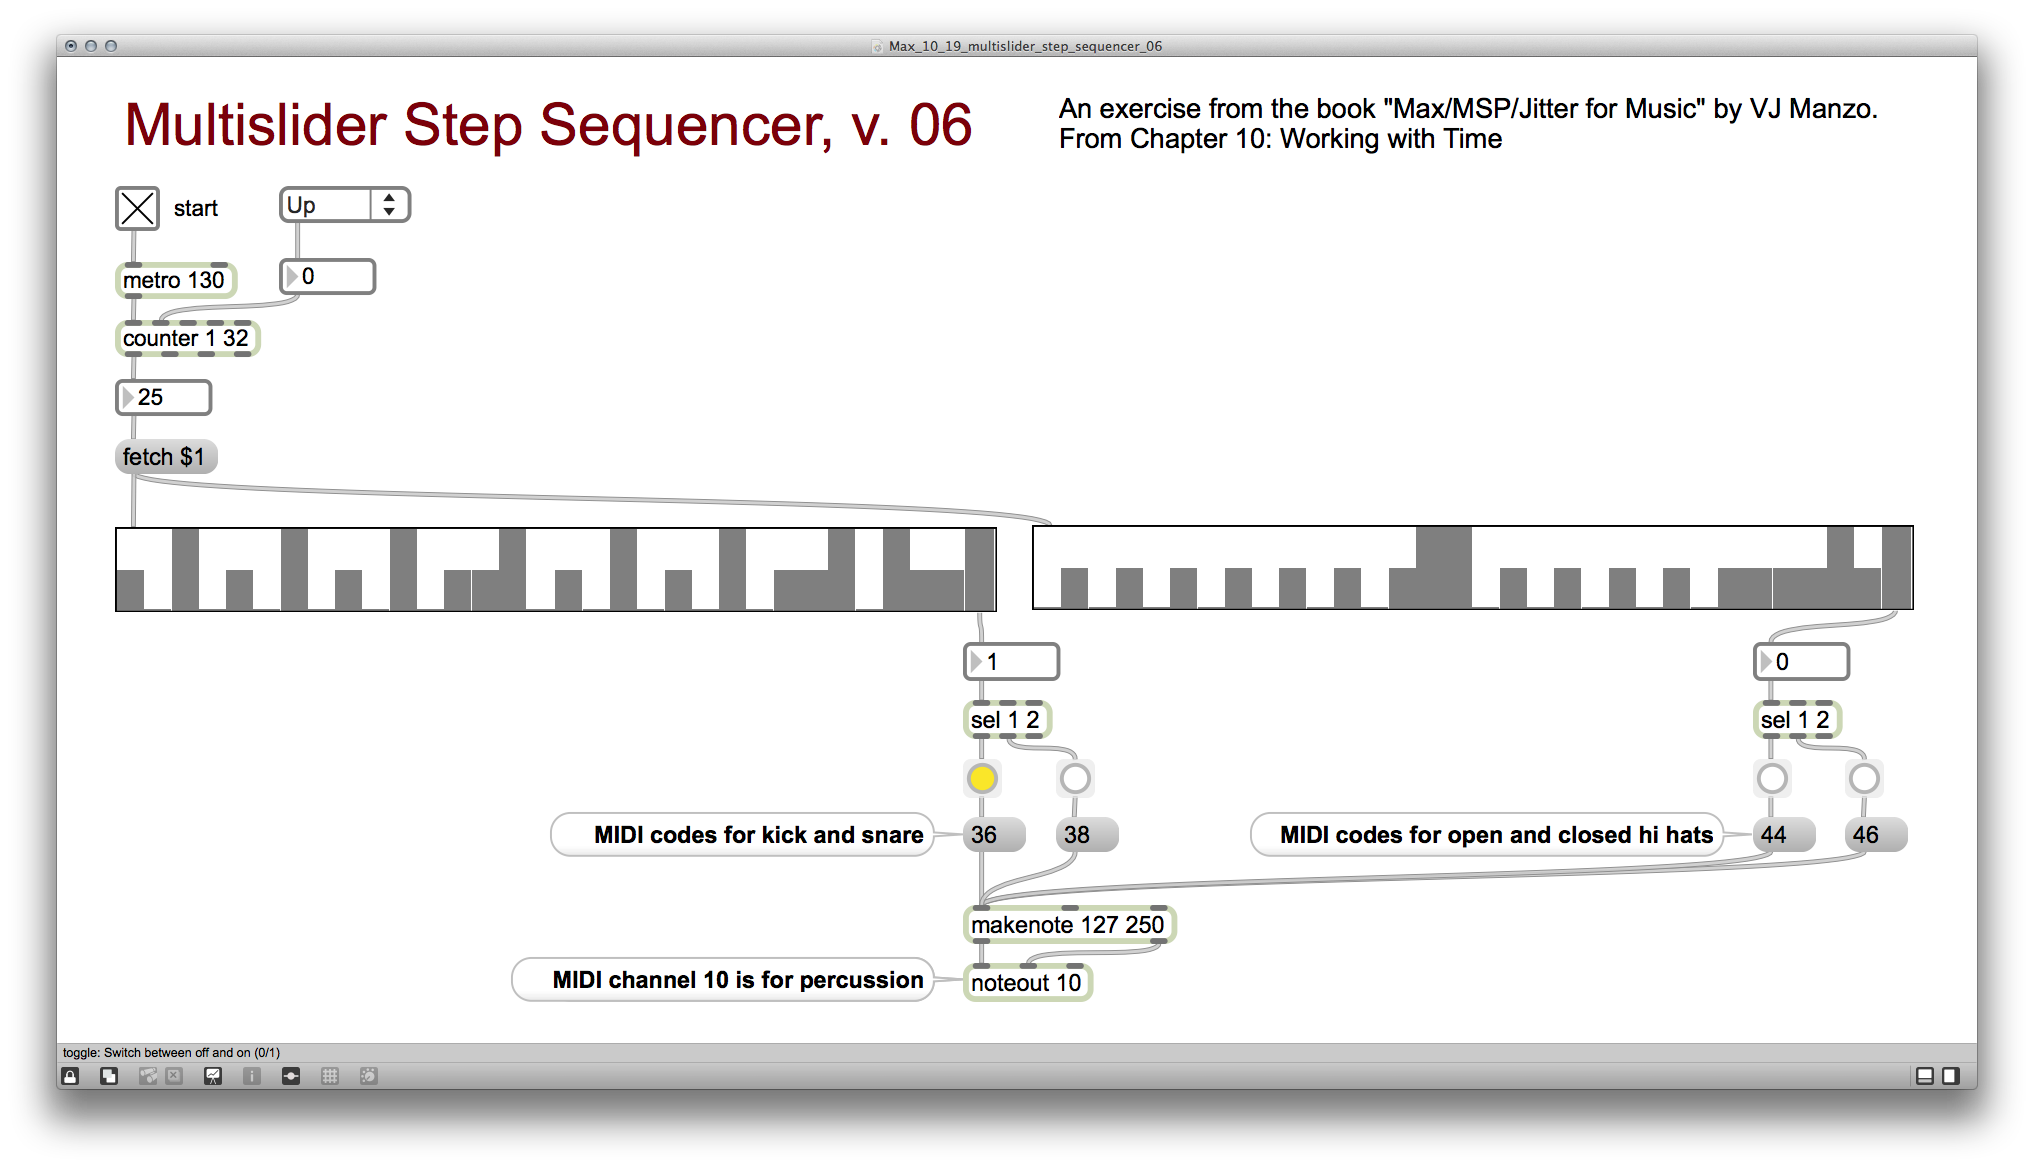 max_10_19_multislider_step_sequencer_06.png